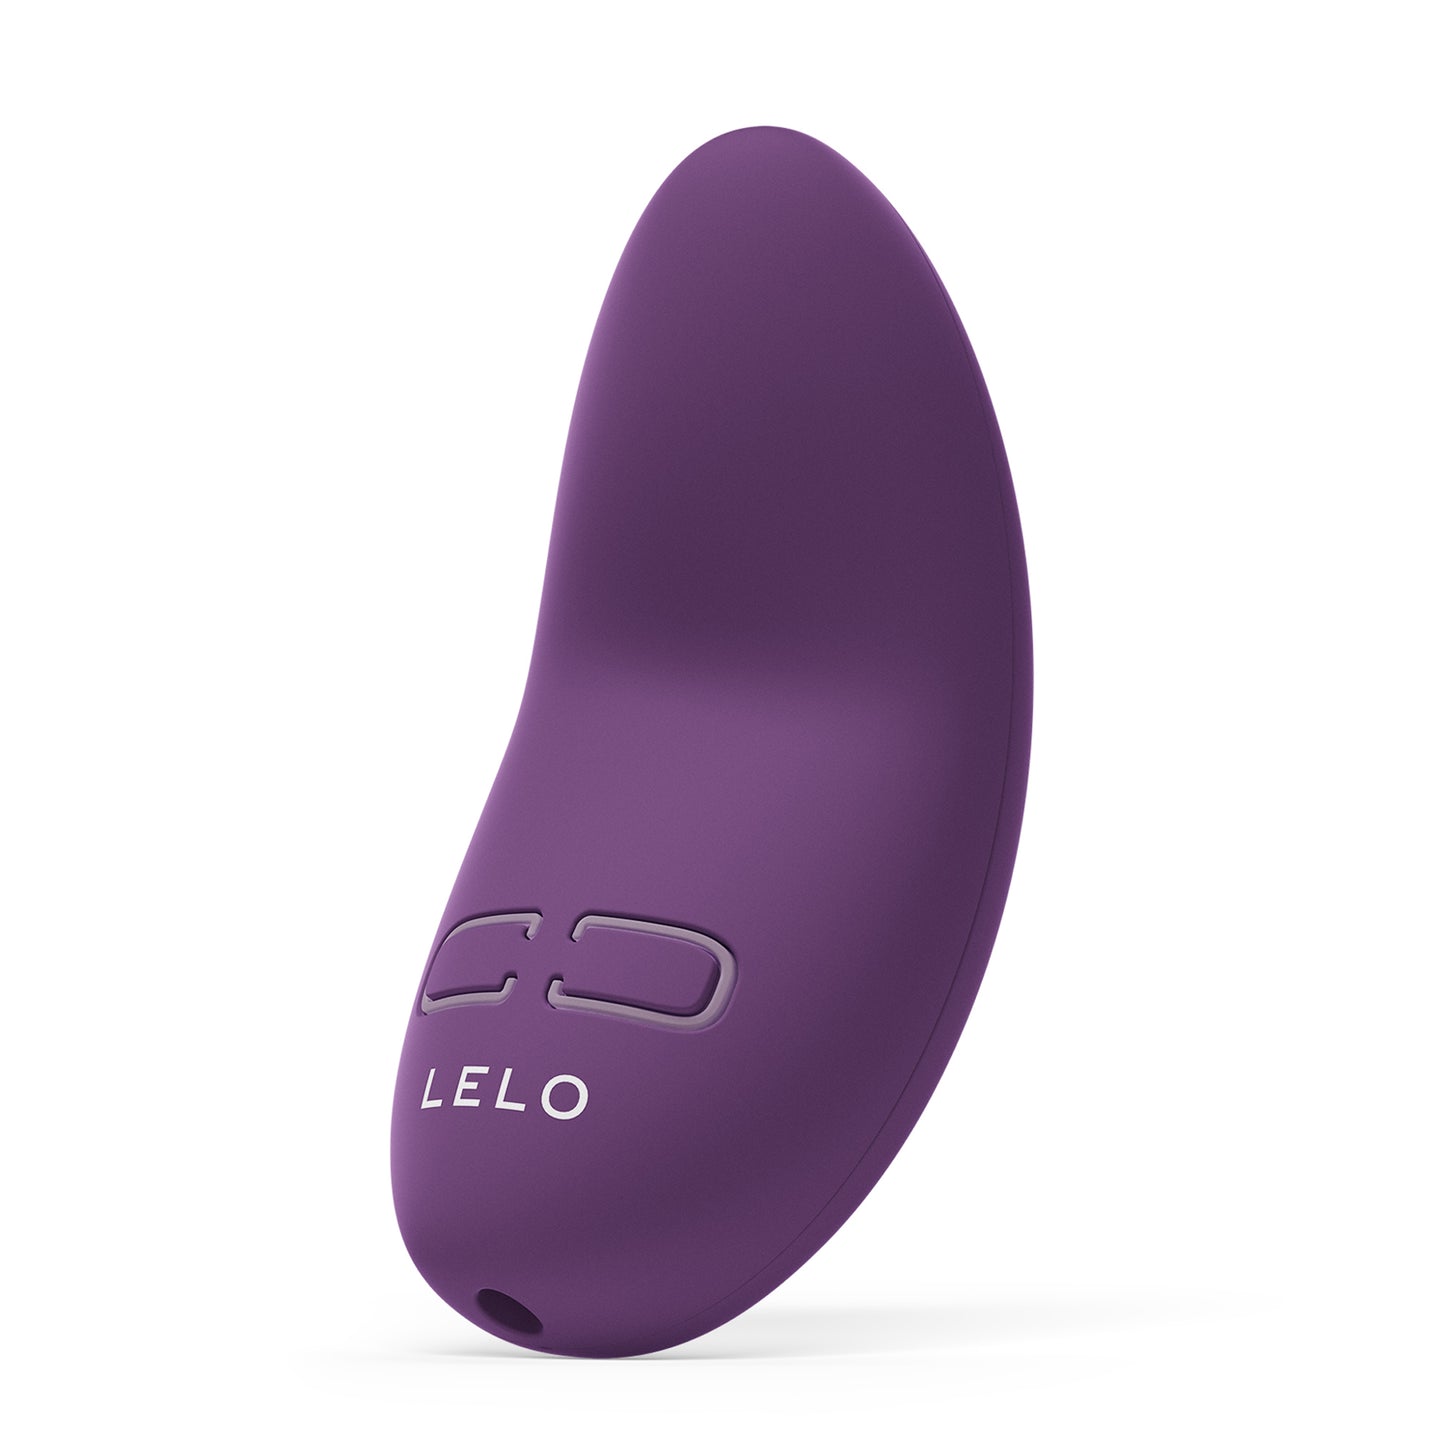 Lelo - Lily 3 Personal Massager Dark Plum - 1